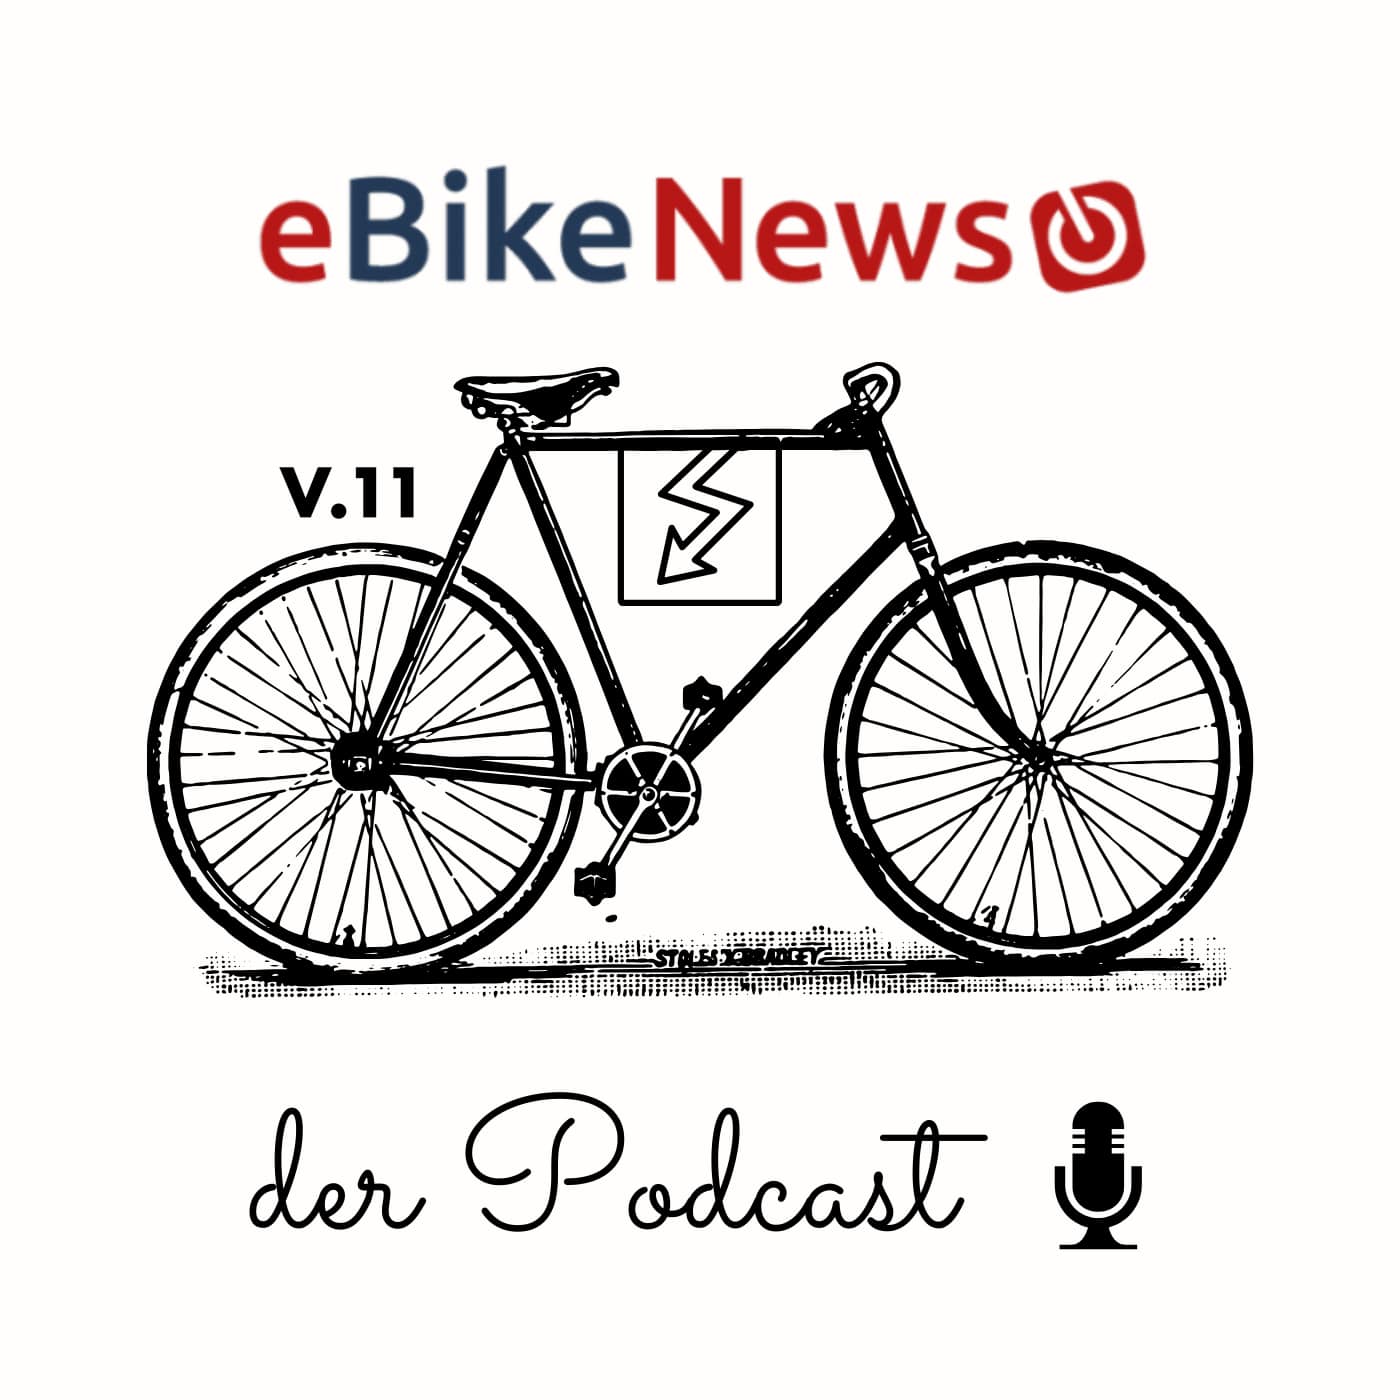 #11 Günstige E-Bikes von Chrisson, Pentalock Fahrradschloss, E-Bike Abwrackprämie